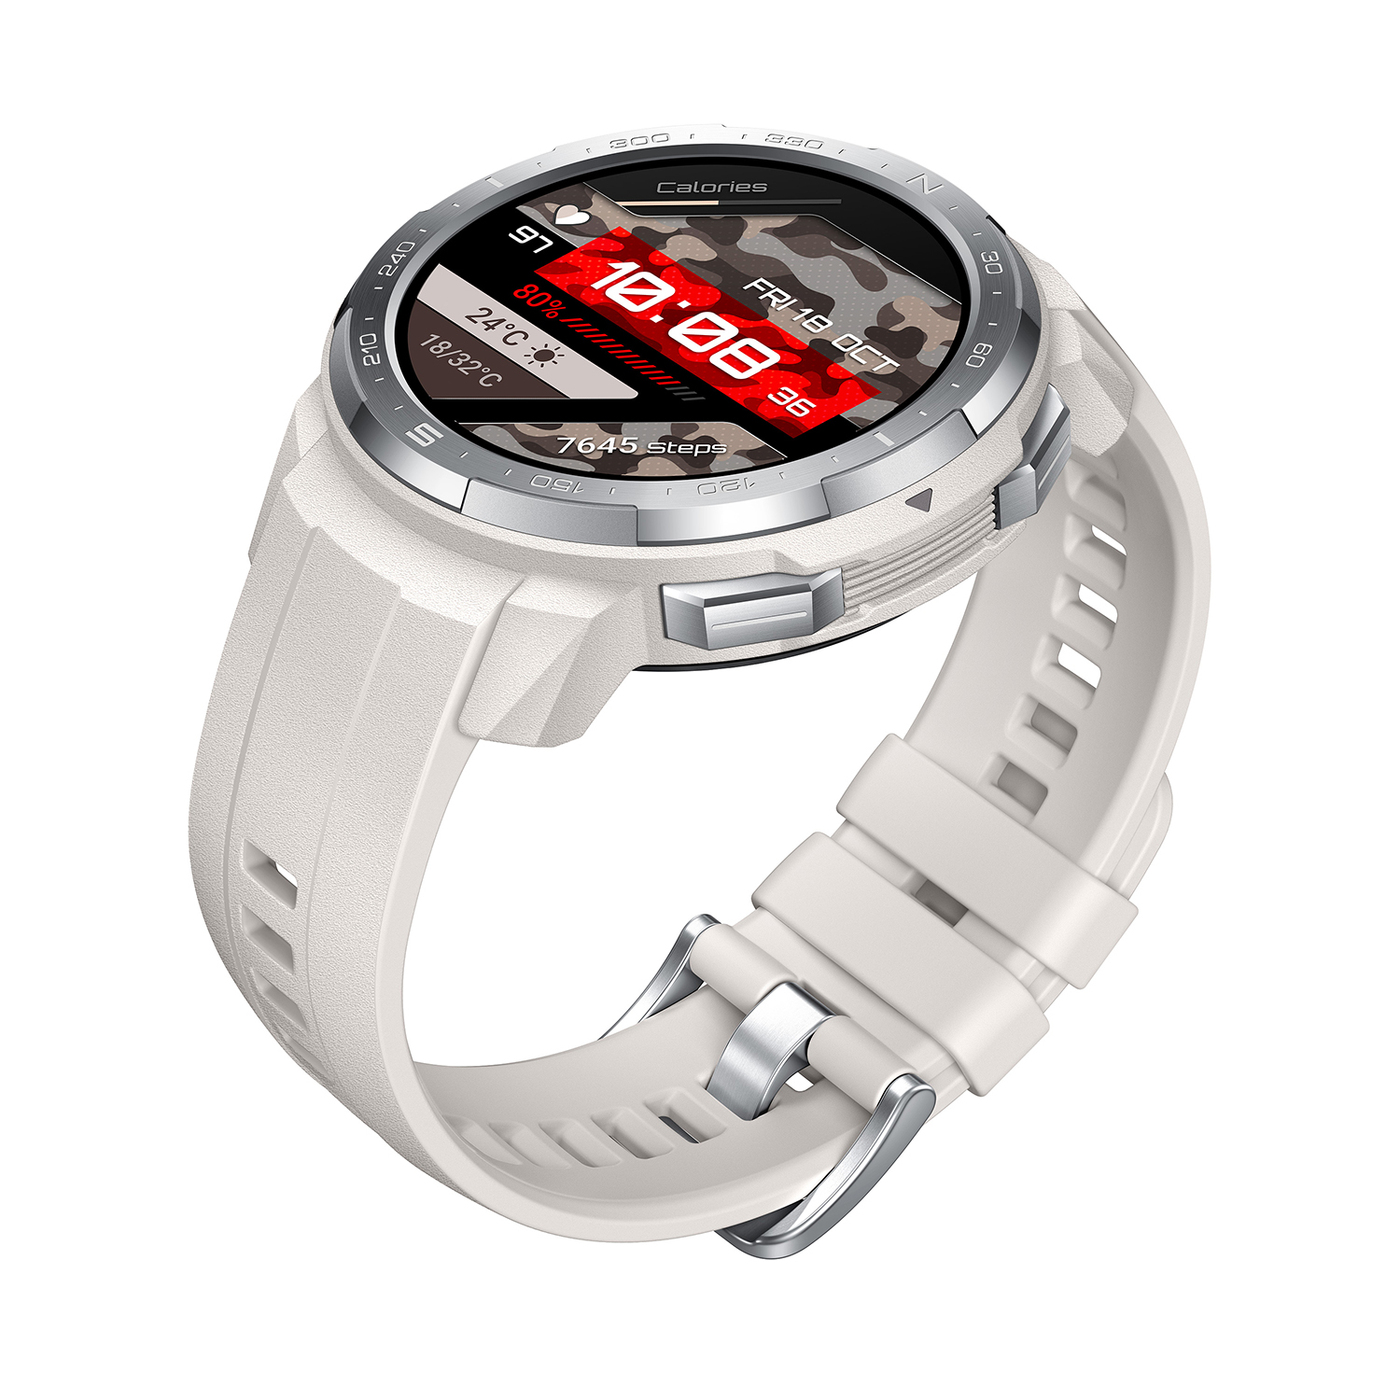 Смарт-часы Honor watch GS Pro White (Kanon-b19p). Хонор вотч GS Pro. Huawei Honor watch GS Pro. Часы хонор GS Pro. Honor watch white